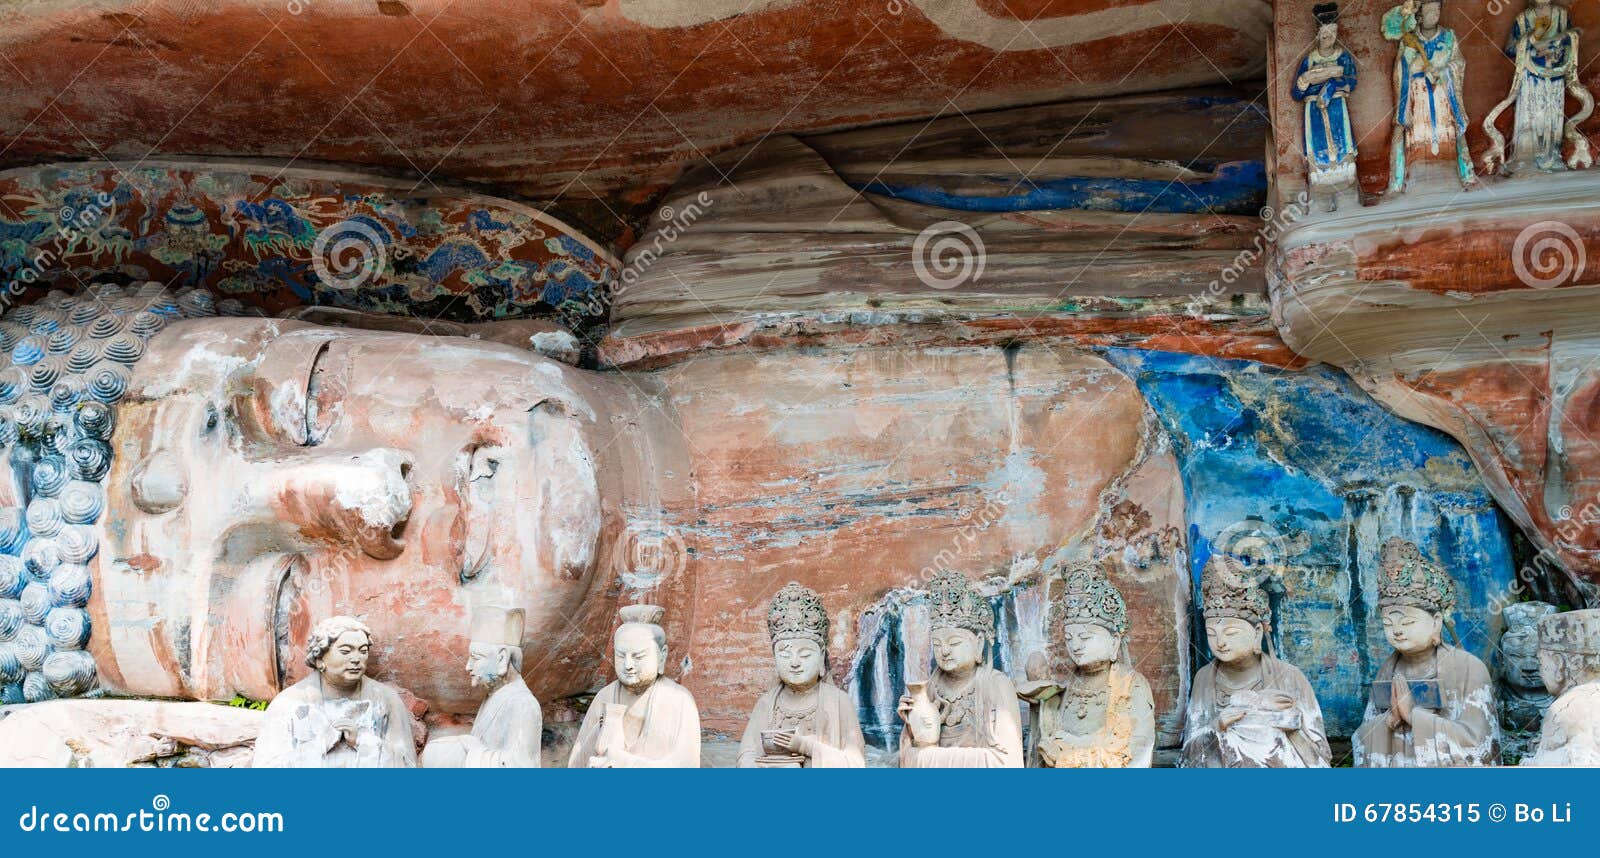 rock carving of sakyamuni buddha entering nirvana, with his disciples